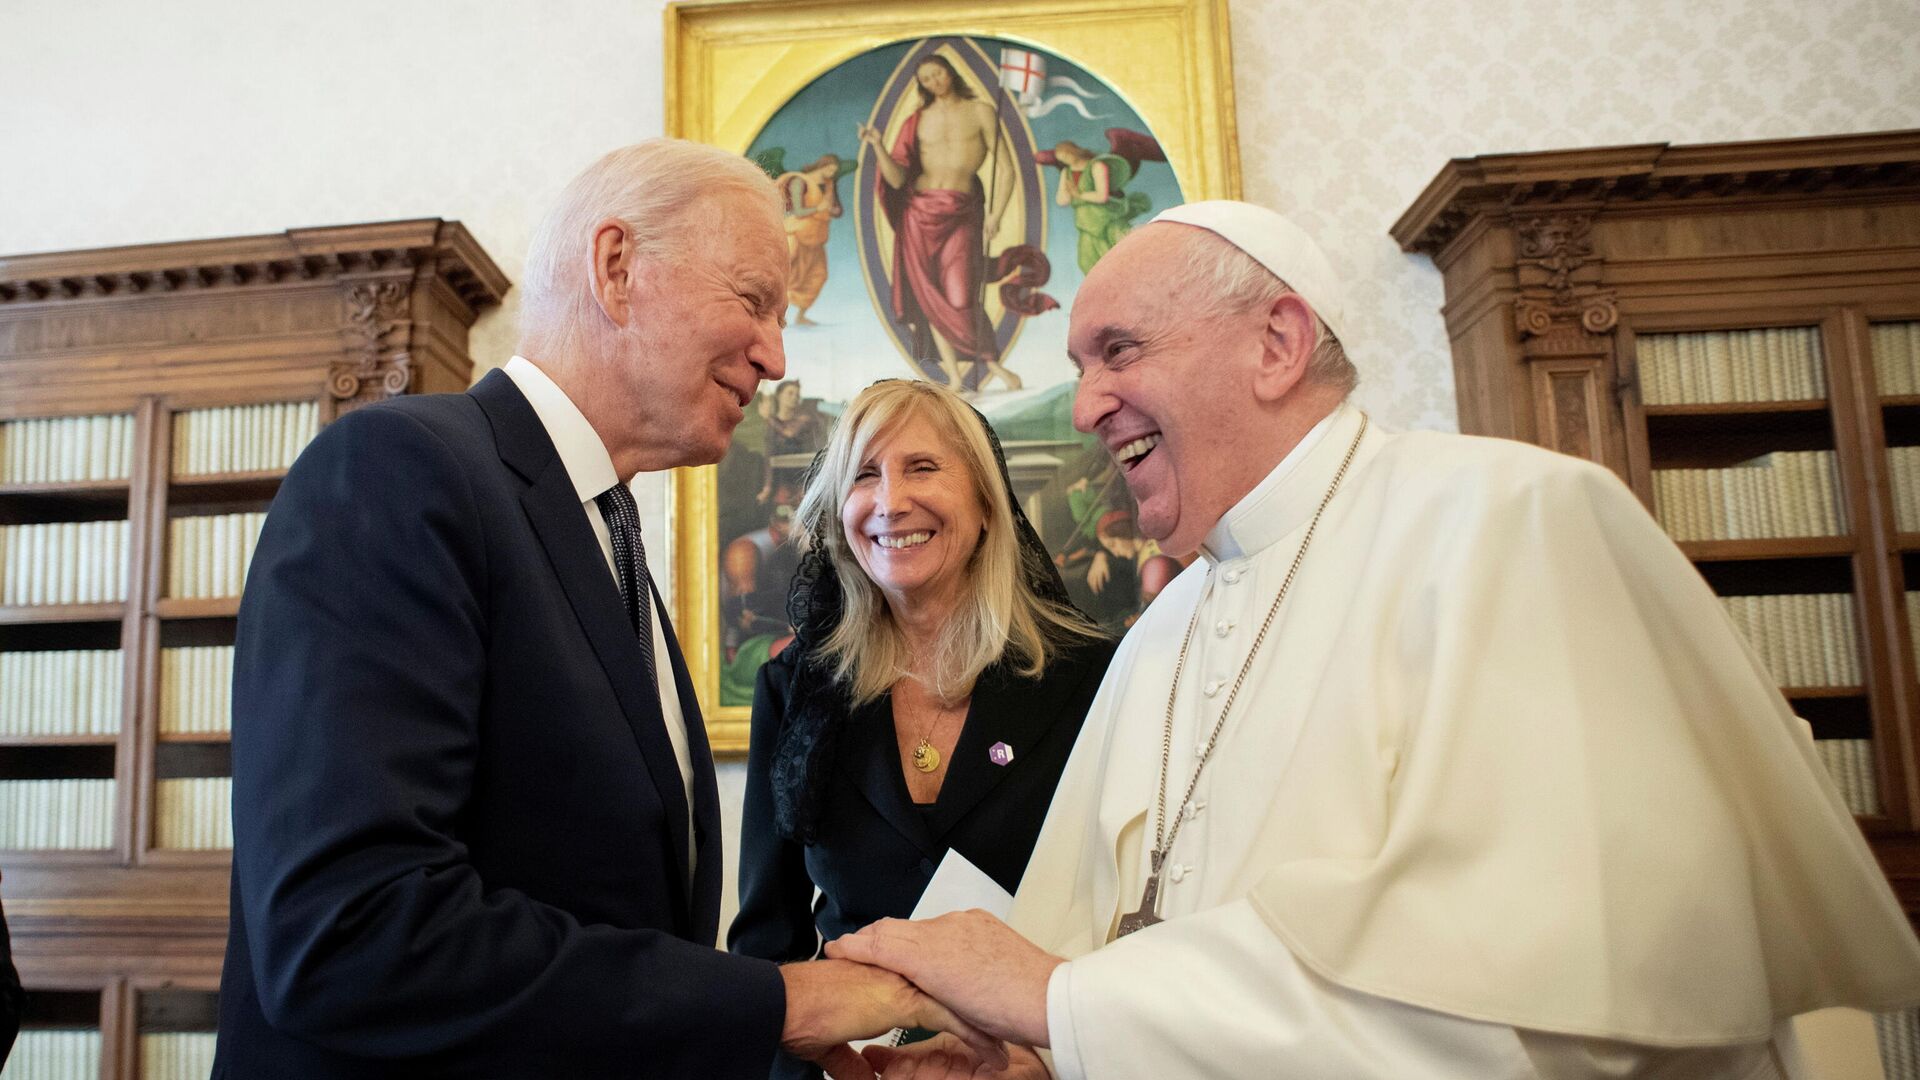 Pope Francis meets U.S. President Joe Biden at the Vatican, October 29, 2021 - Sputnik International, 1920, 29.10.2021